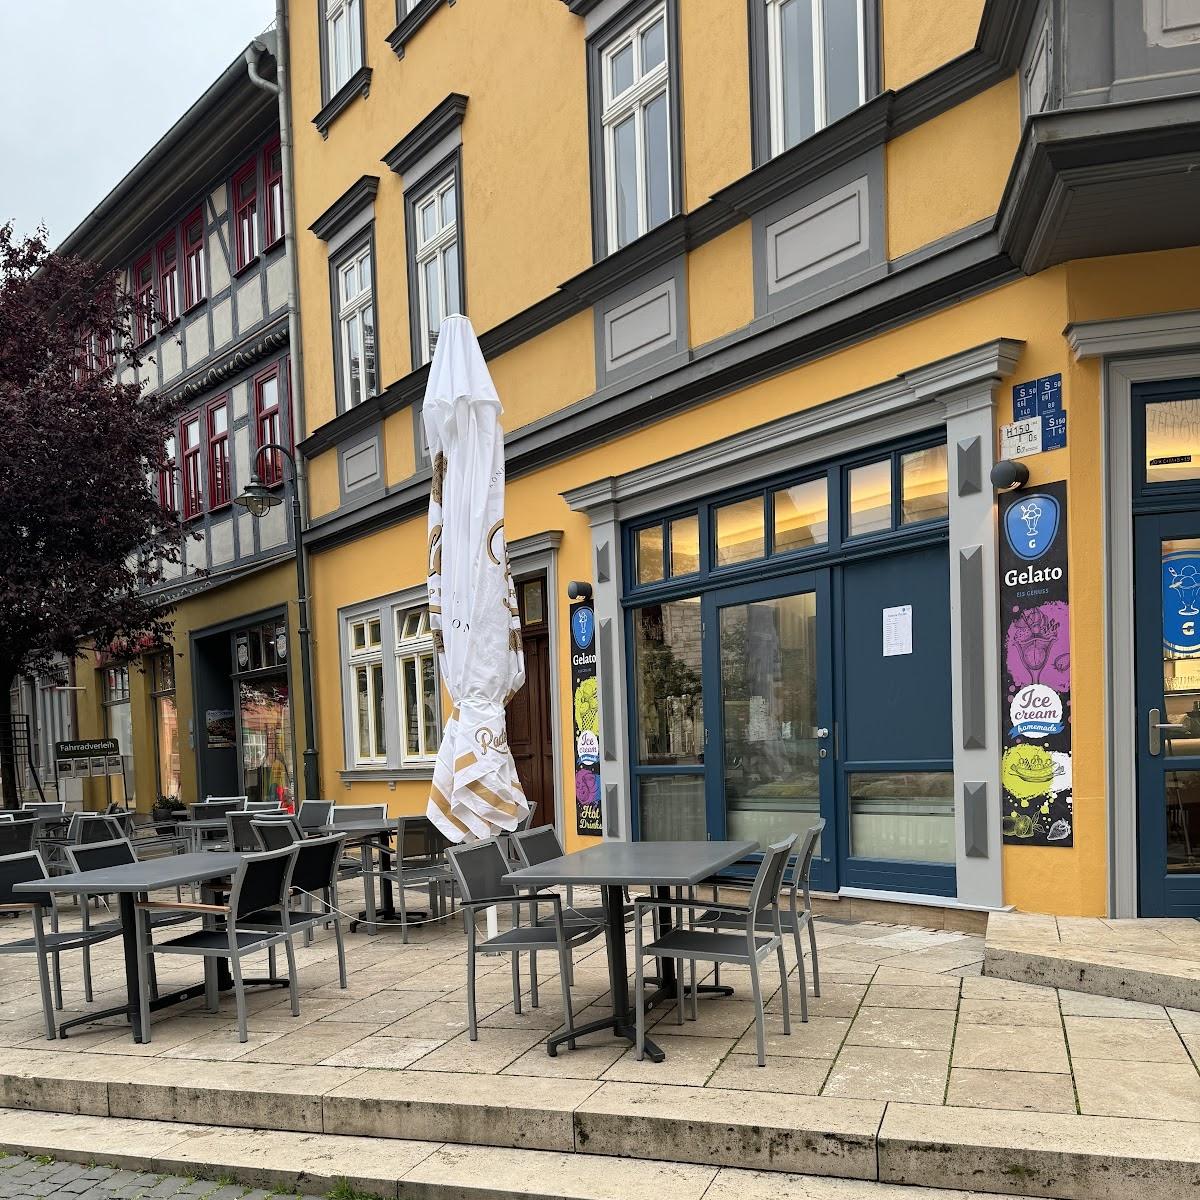 Restaurant "Gelato" in Bad Langensalza